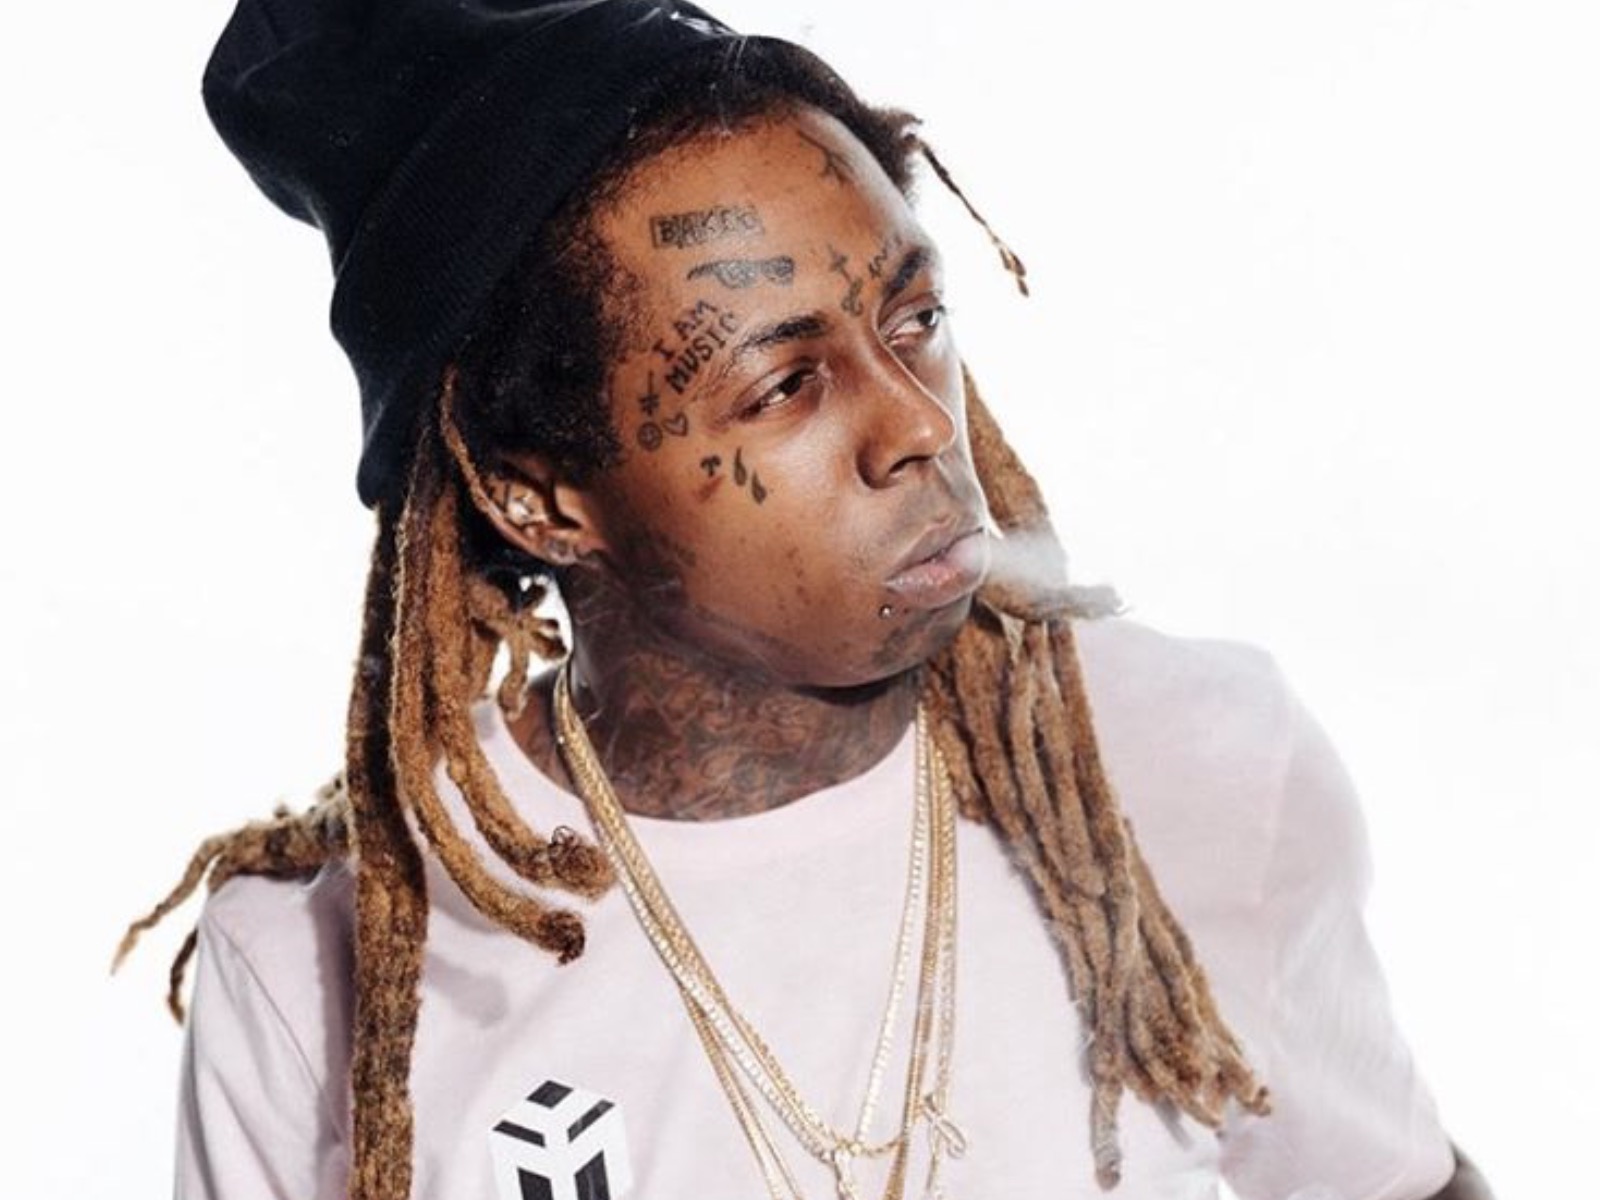 Download Lil Wayne Wallpaper - Lil Wayne , HD Wallpaper & Backgrounds